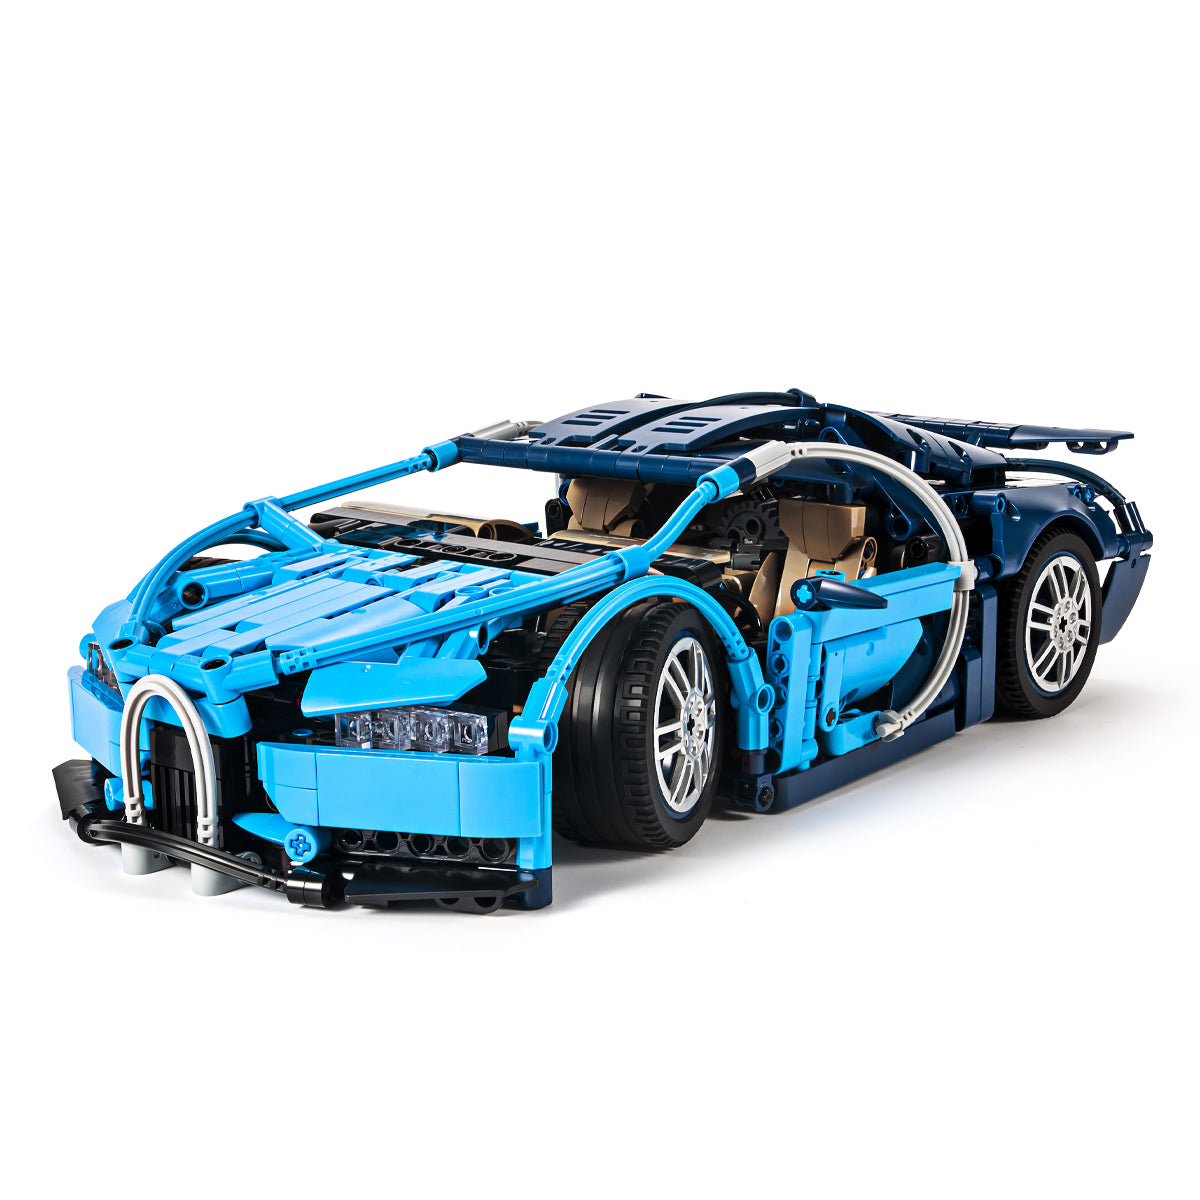 DAHONPA Bluce Sports Car MOC Building Blocks Kit, 1:14 Bugatti Scale Sports Car Model Toys(1258 Pcs)，Gift for Adults and Kids